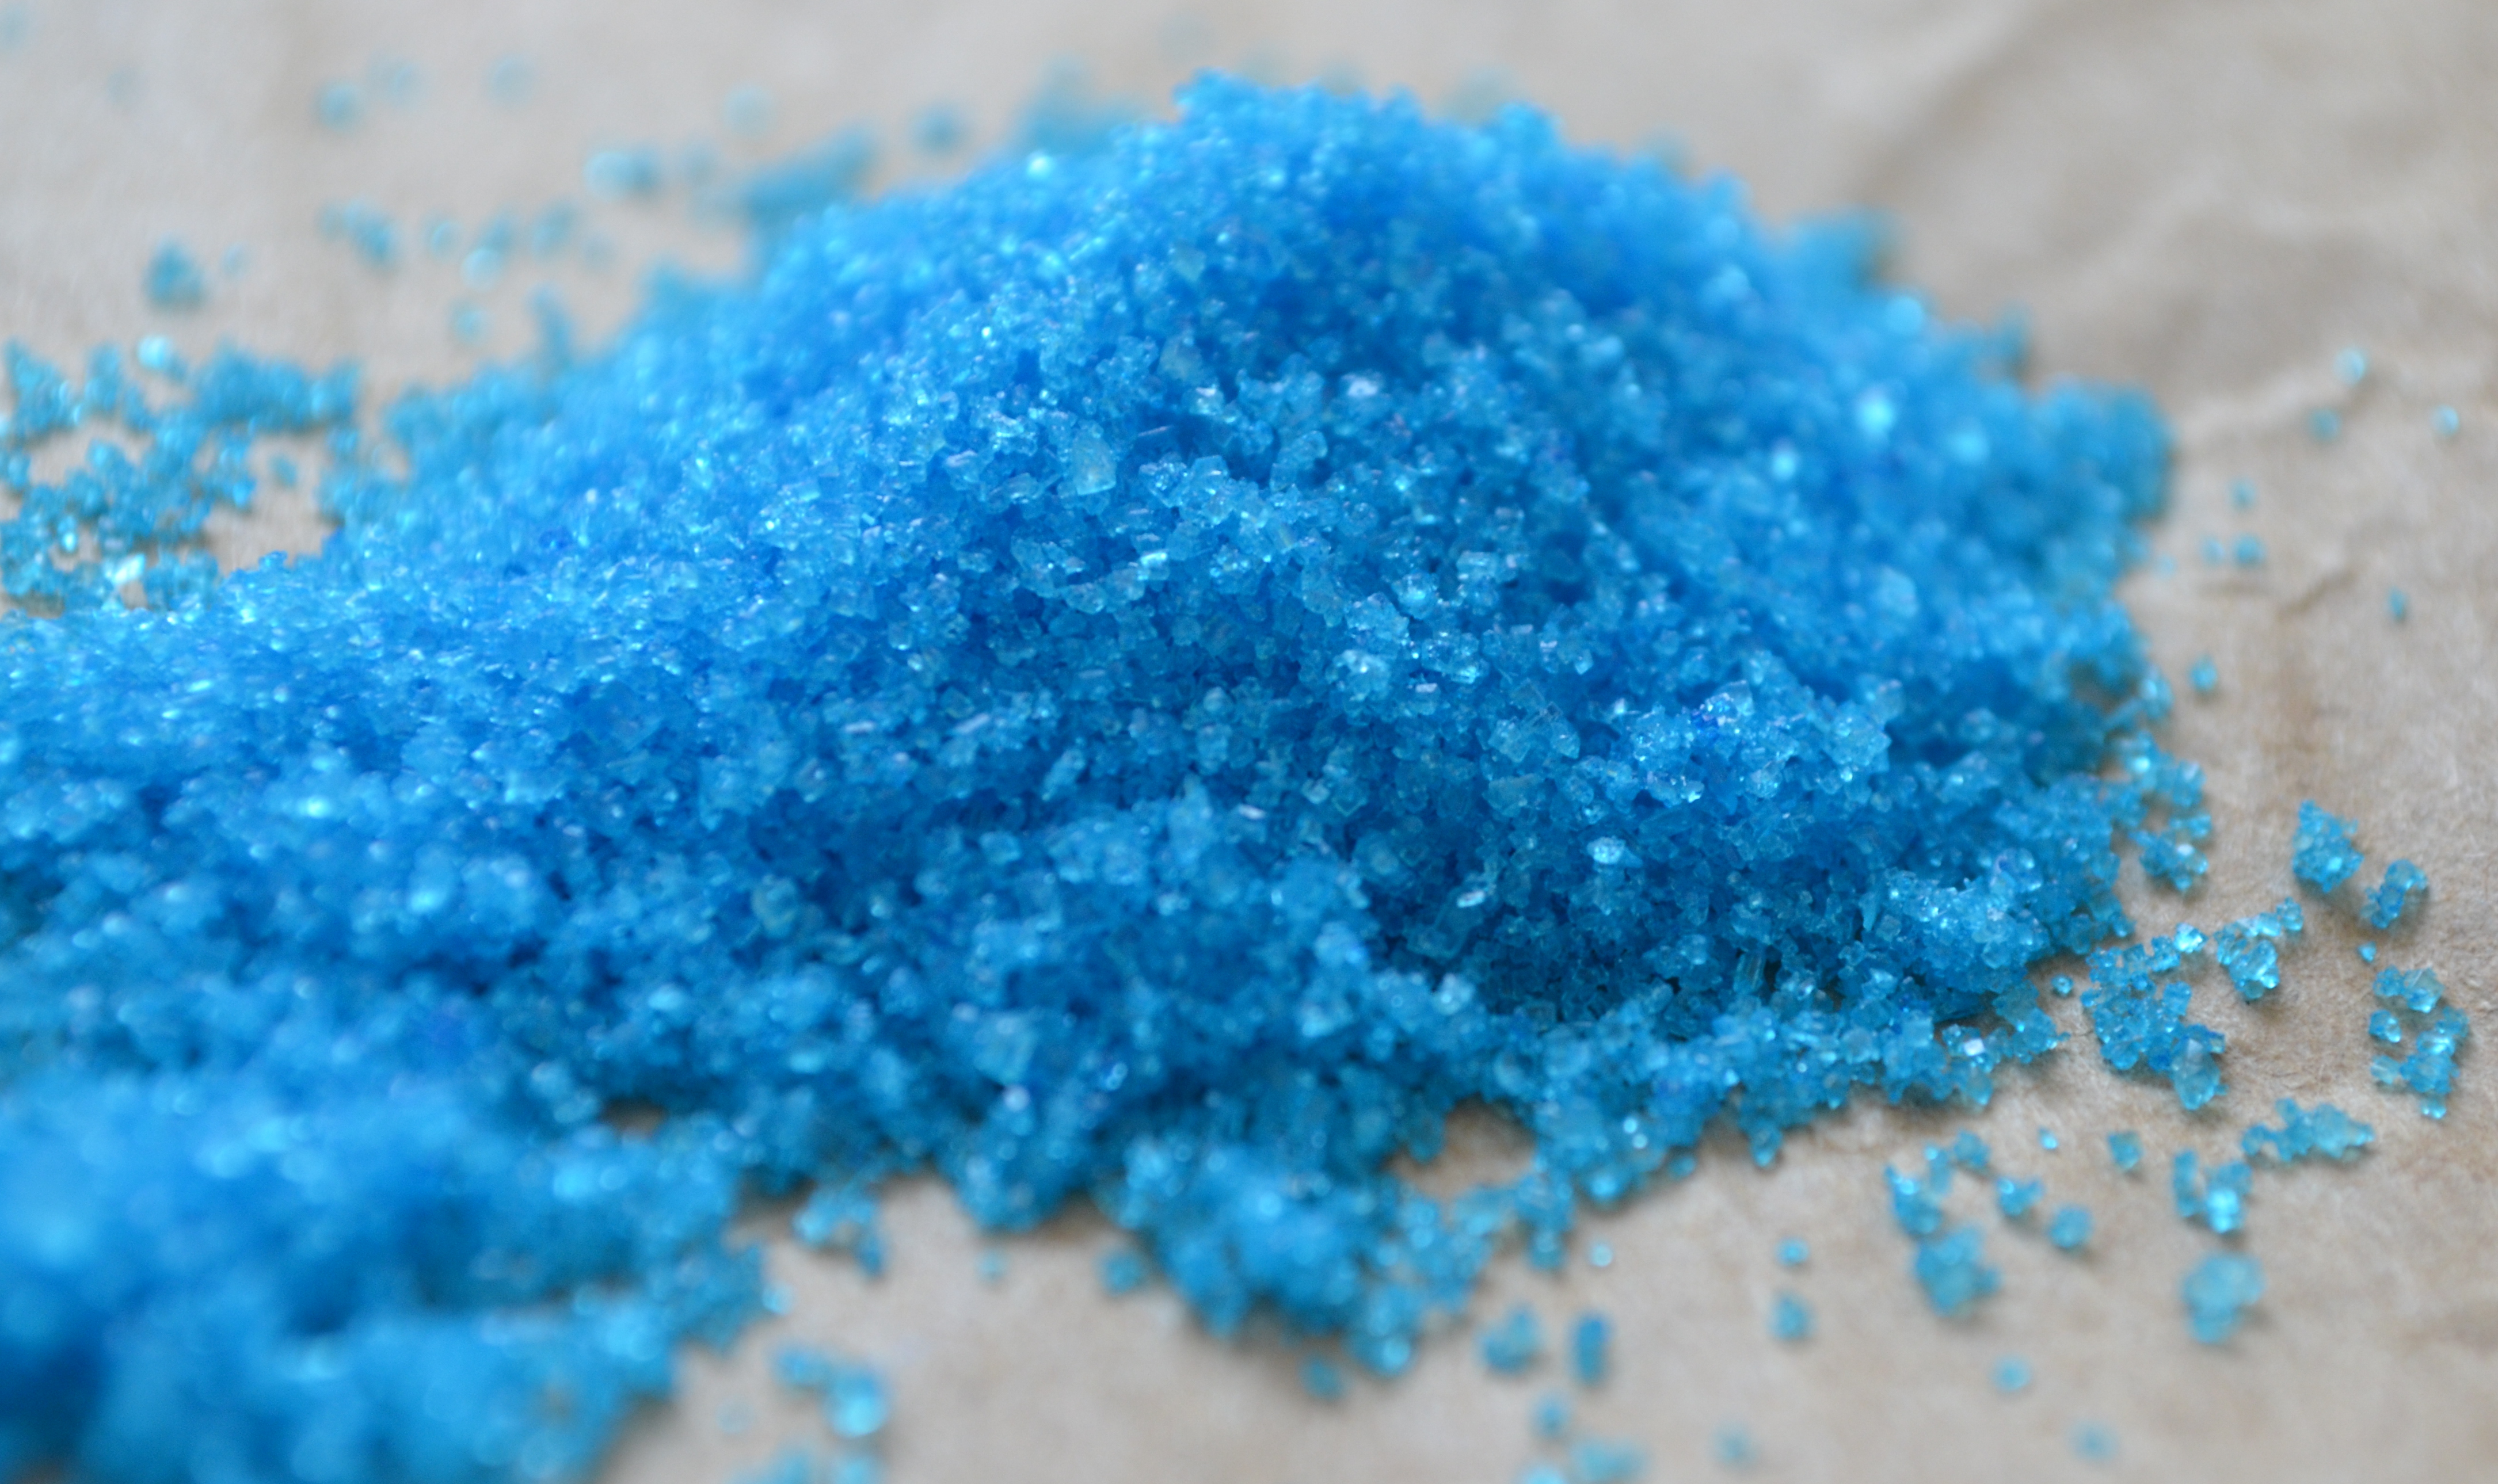 Crystal Meth Wallpaper Blue Sugar In The